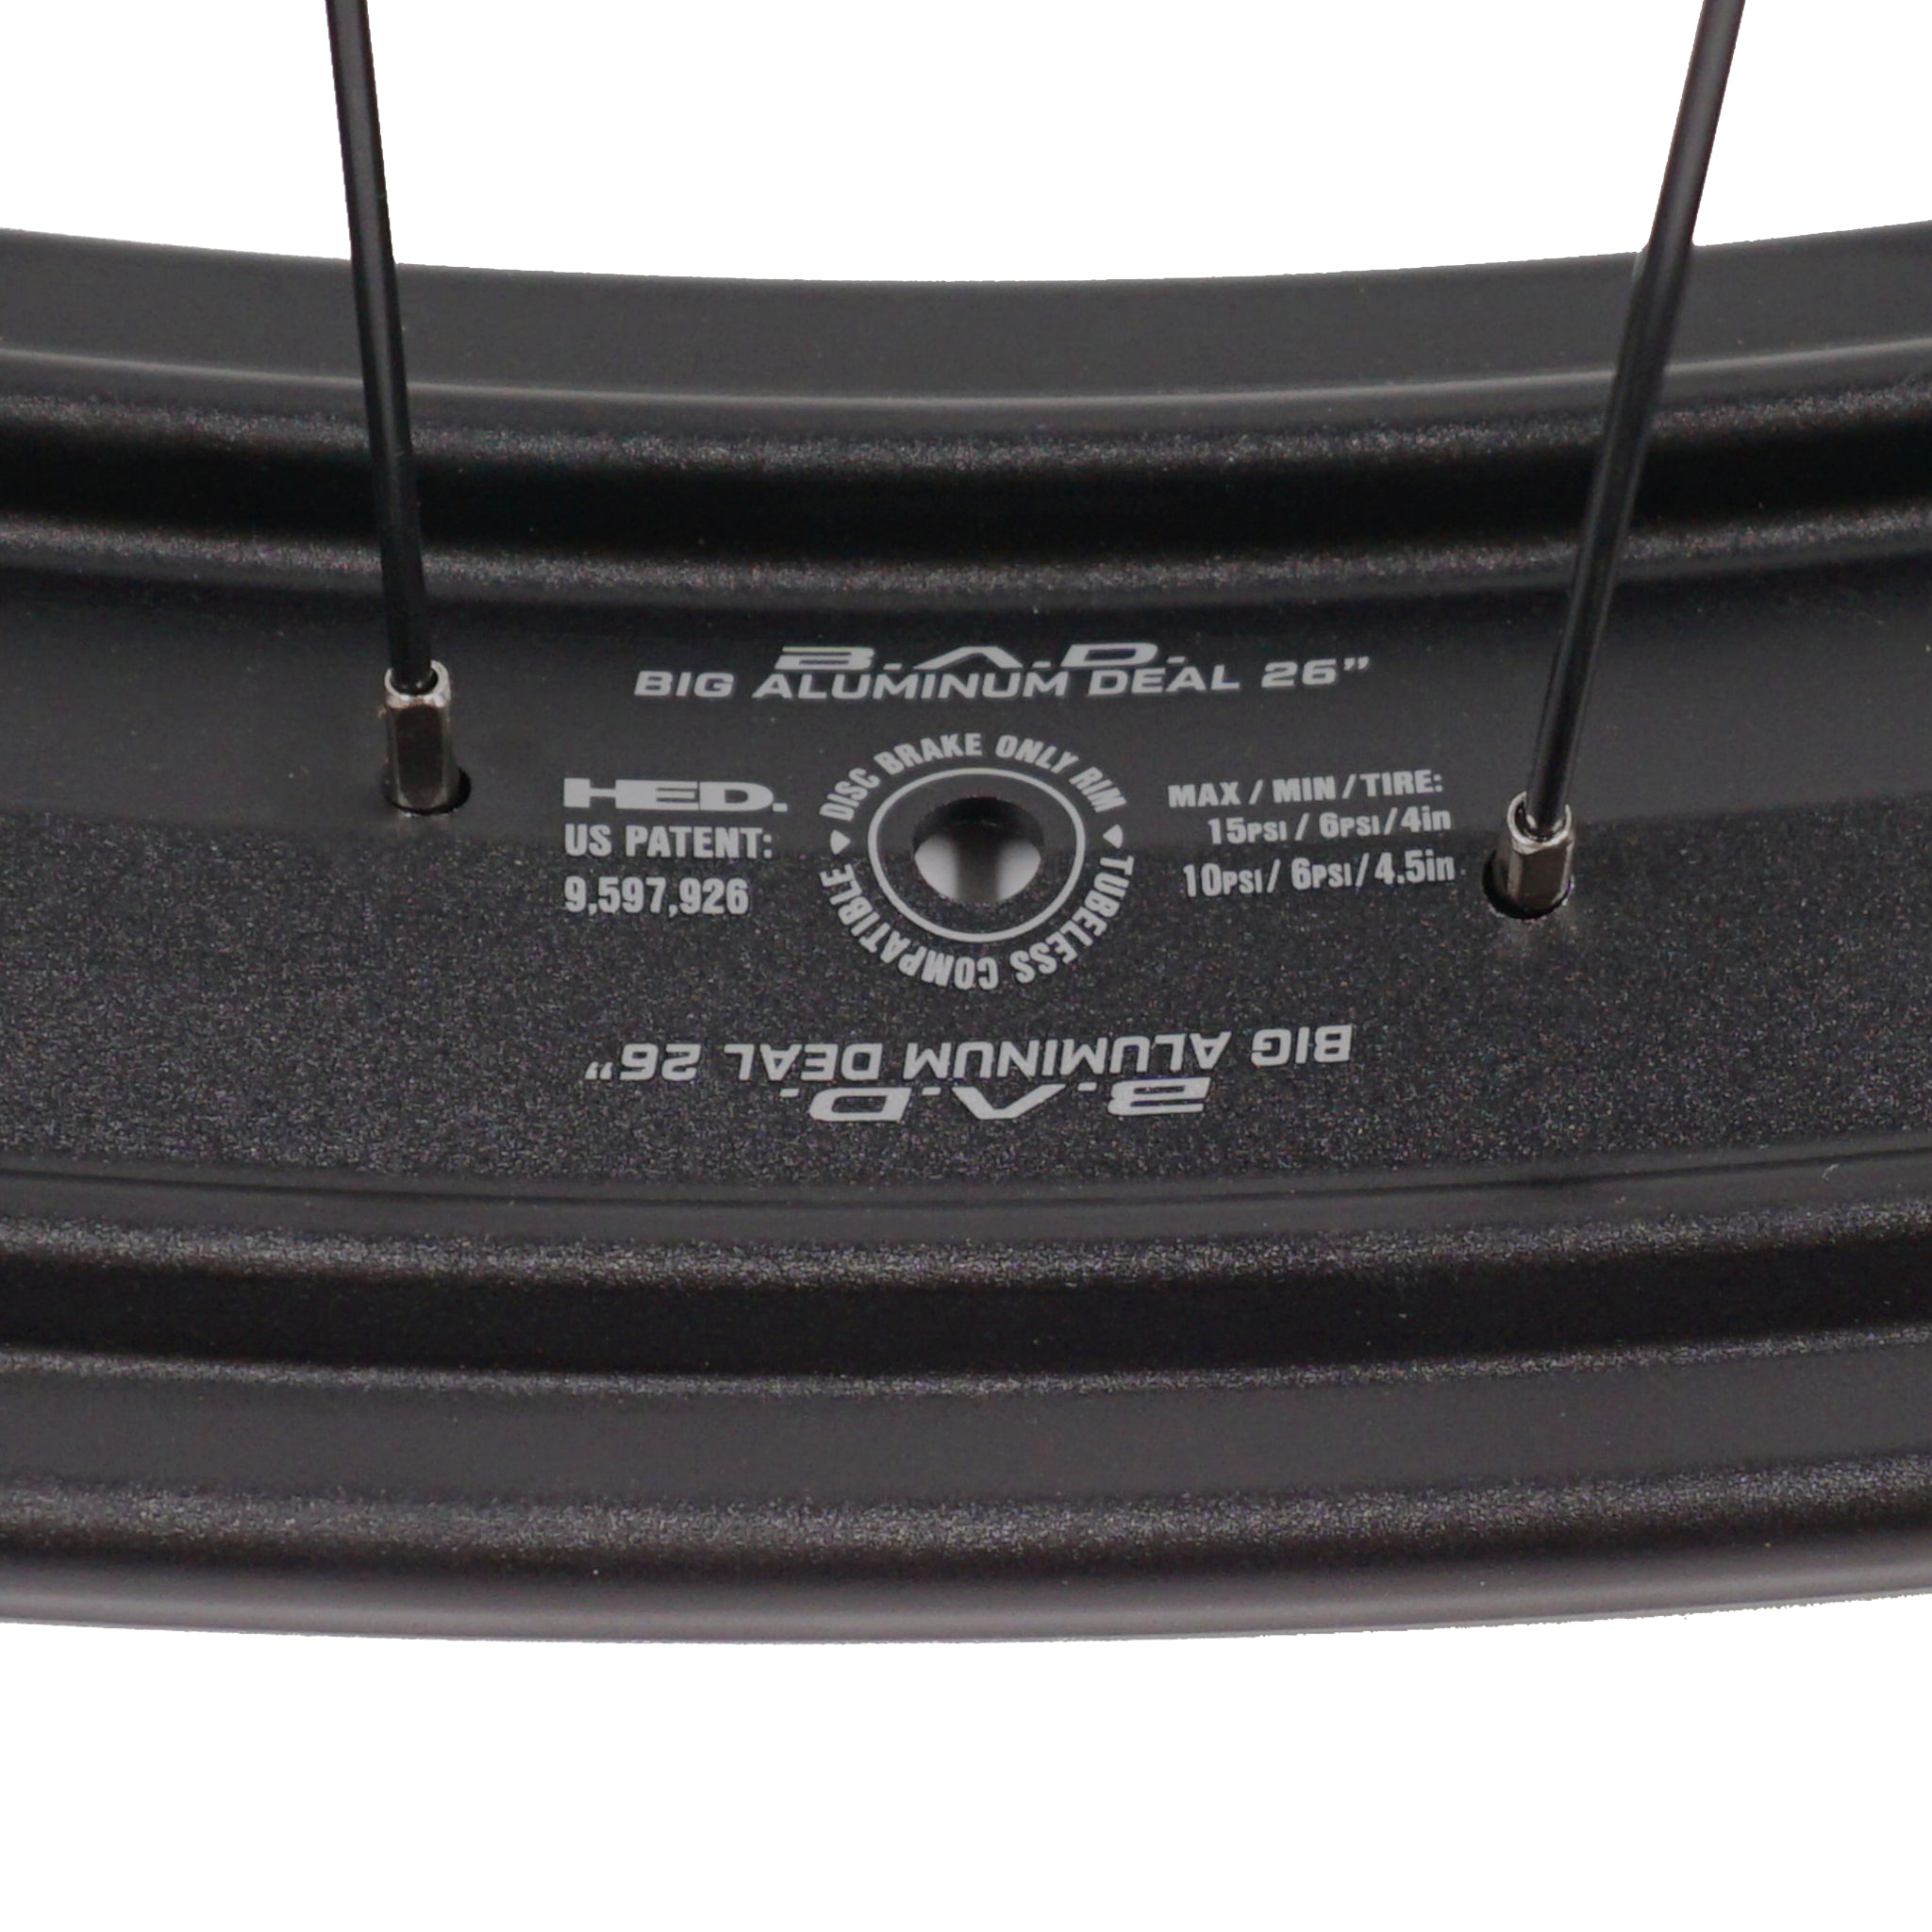 HED Big Aluminum Deal 26-inch REAR 12x197 TA Fat Bike Disc Wheel